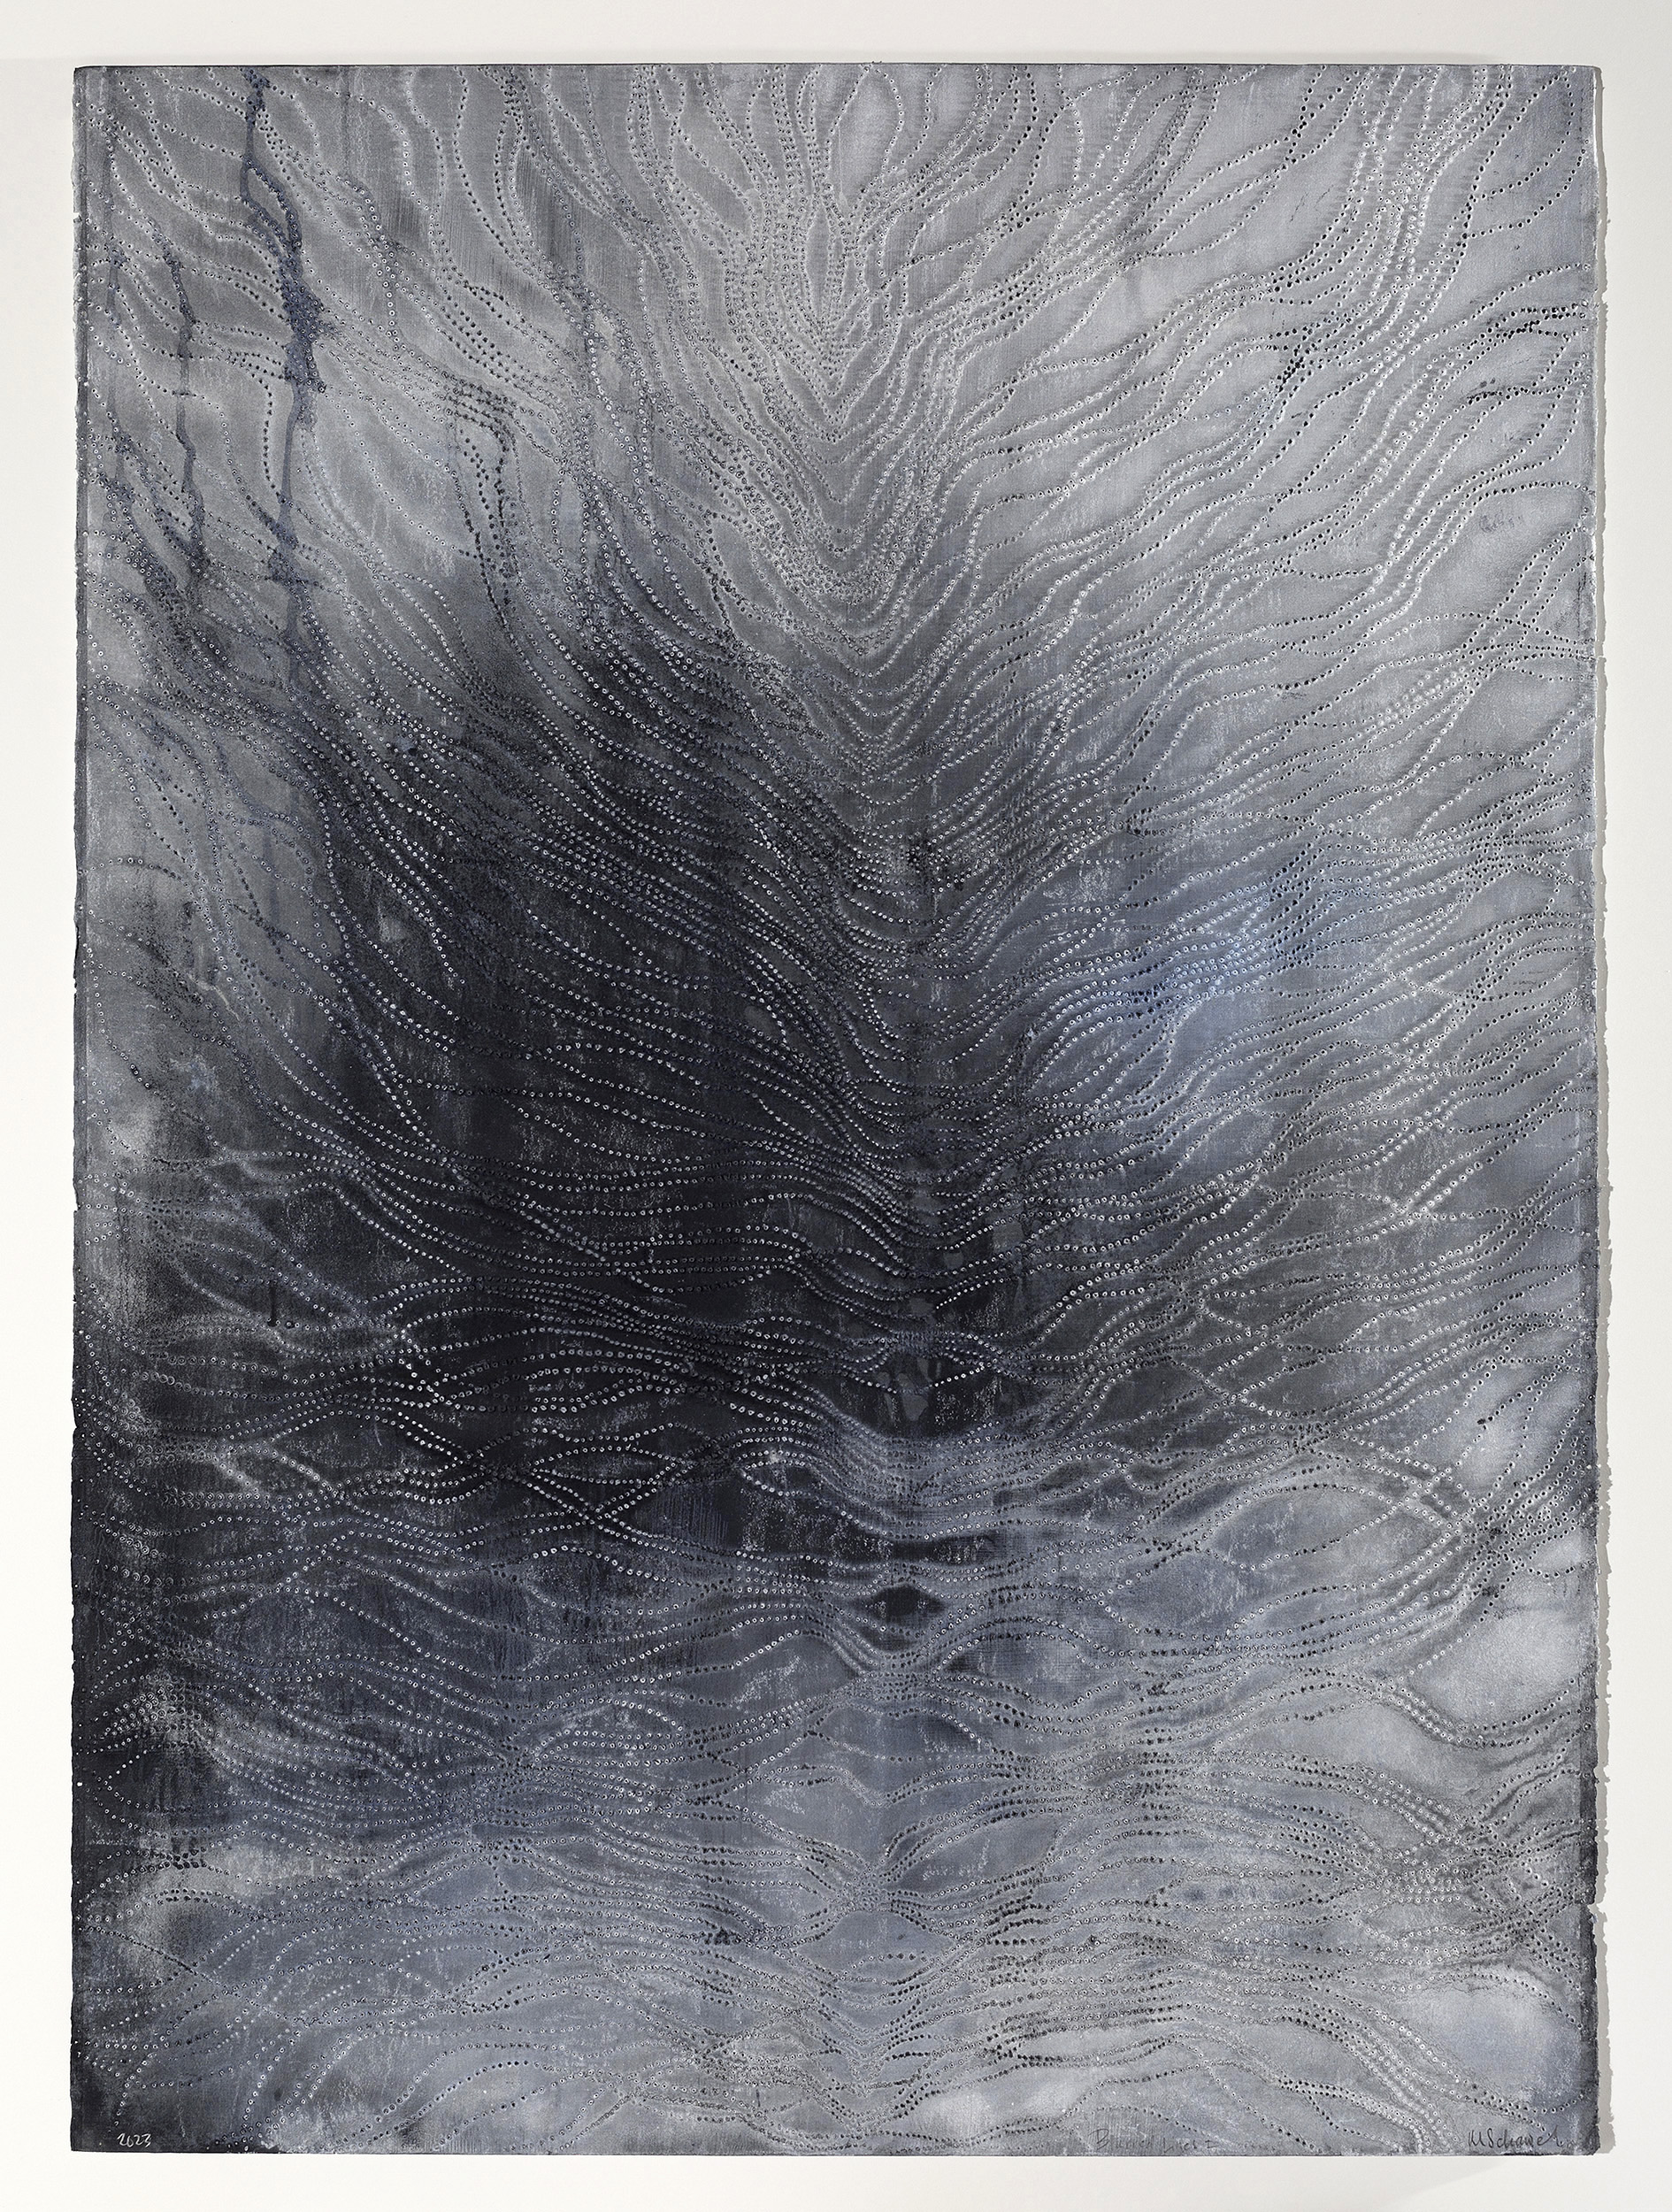 Melinda Schawel 'Blurred Lines I' ink, graphite on perforated paper 105 x 75cm $6,600